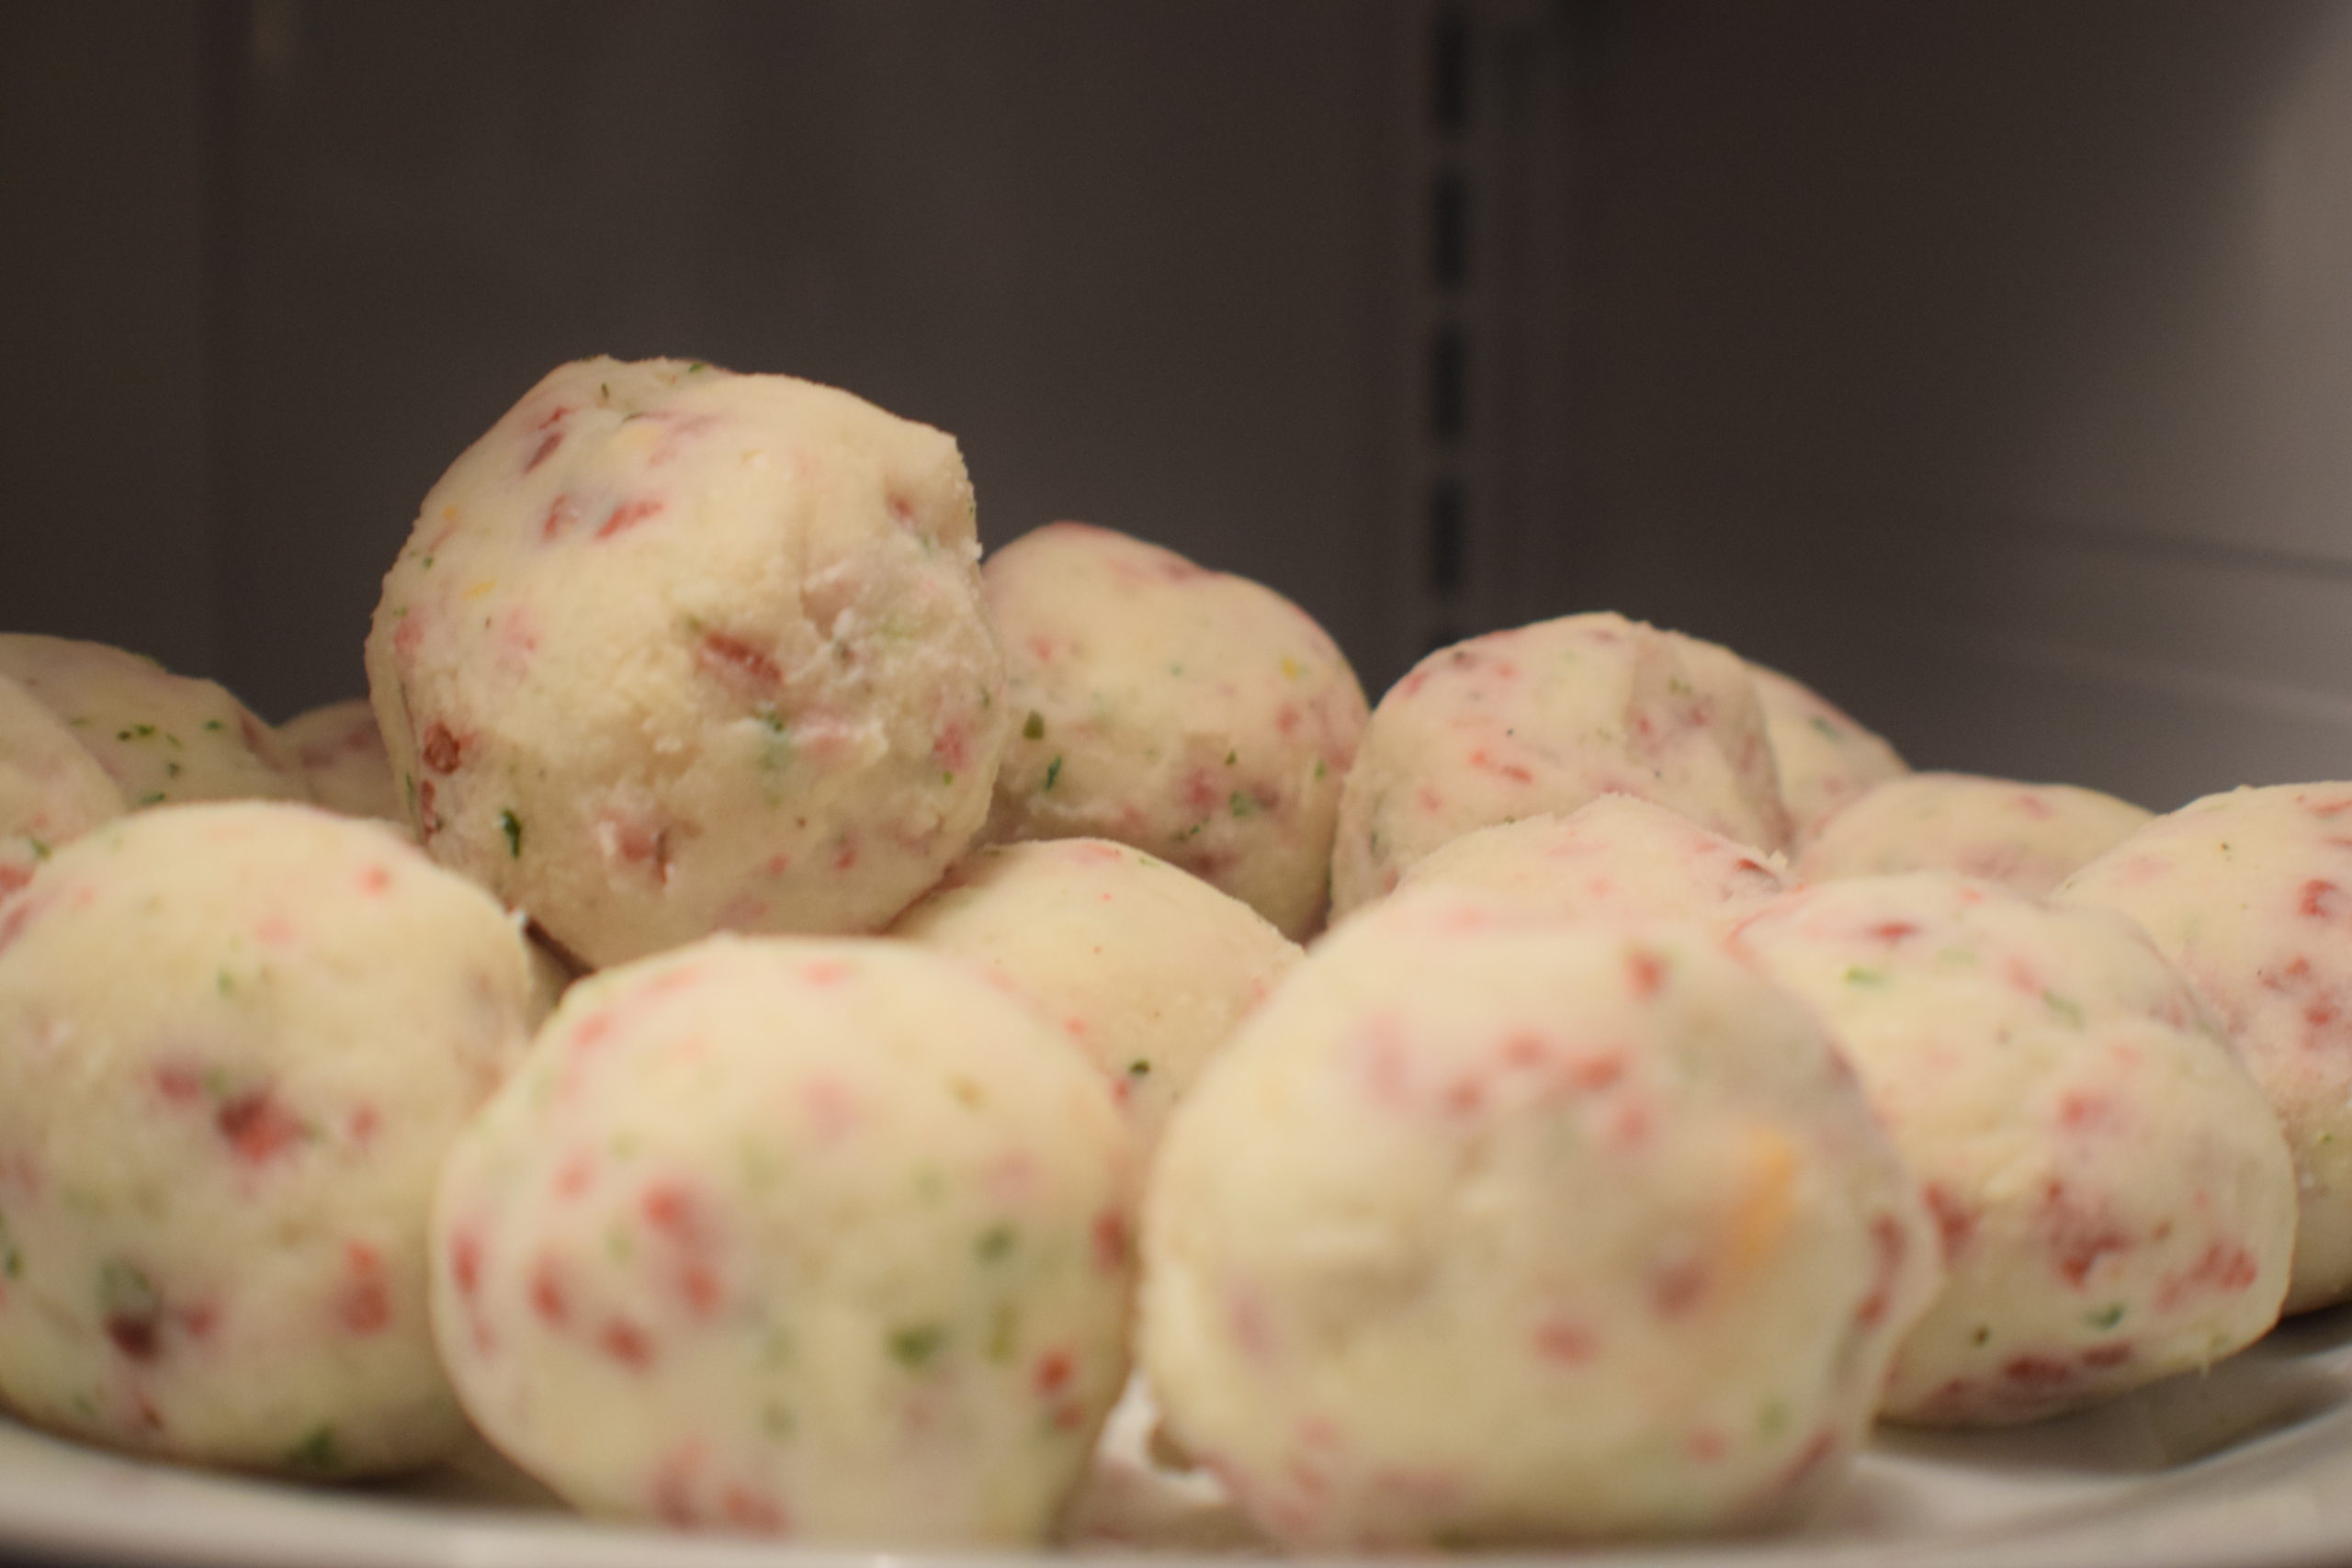 mashed potato balls on a white plate in a fridge